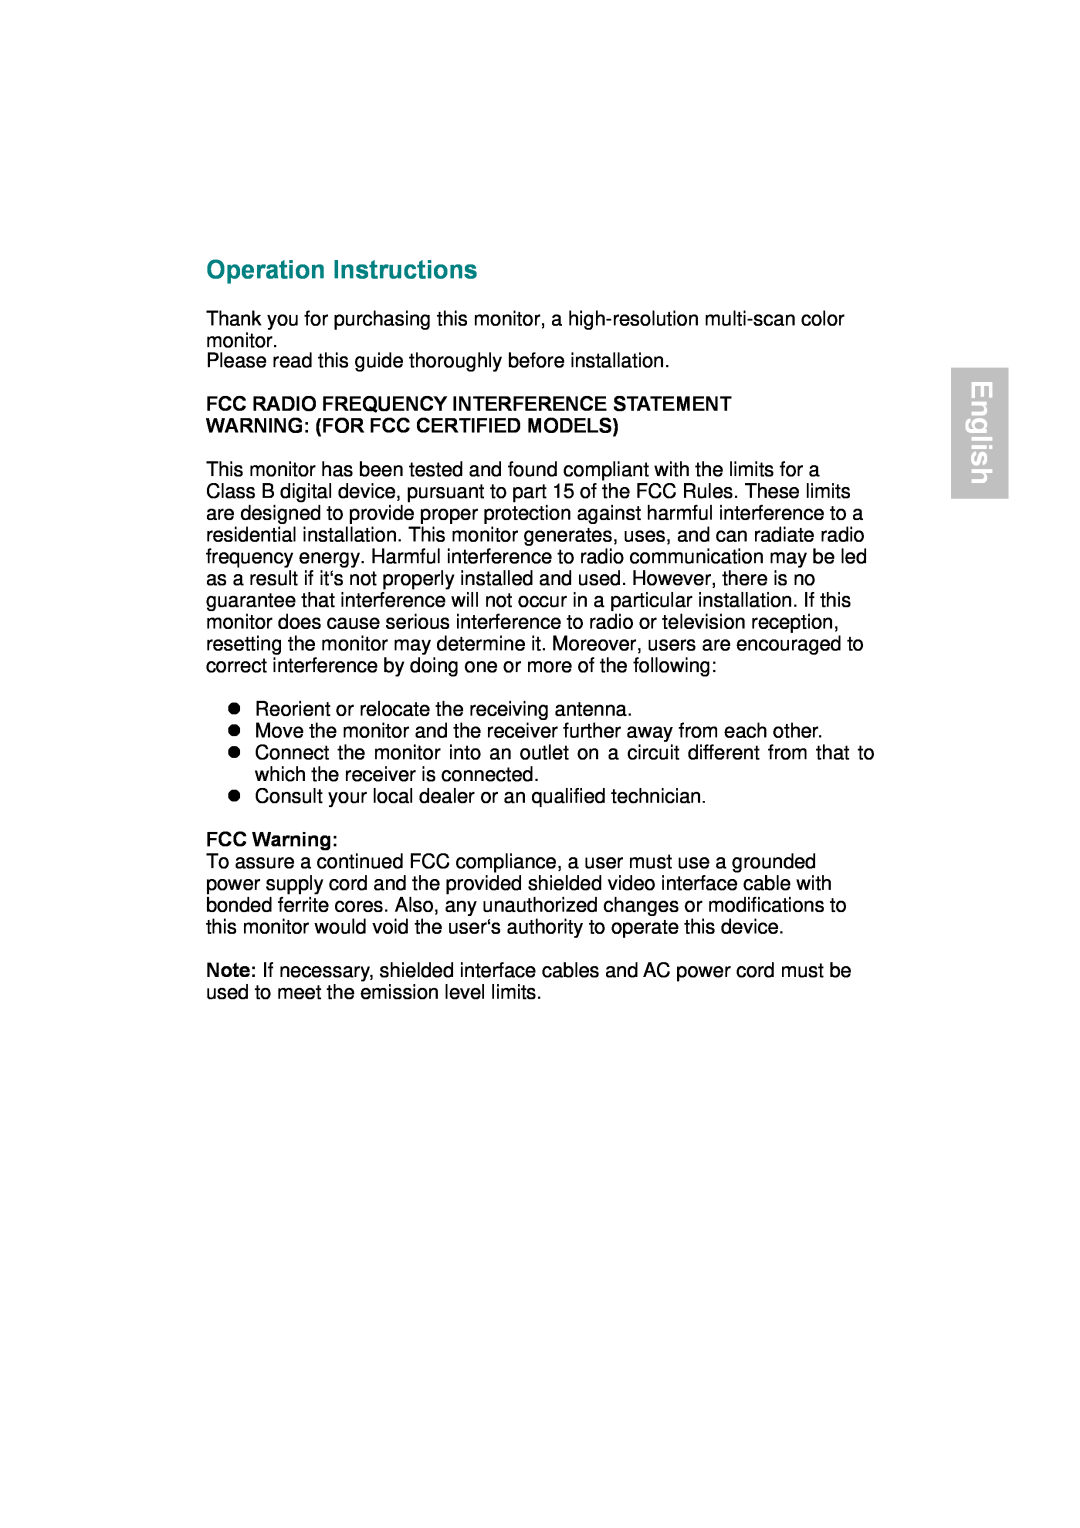 AOC LM742 manual English, Operation Instructions, FCC Warning 